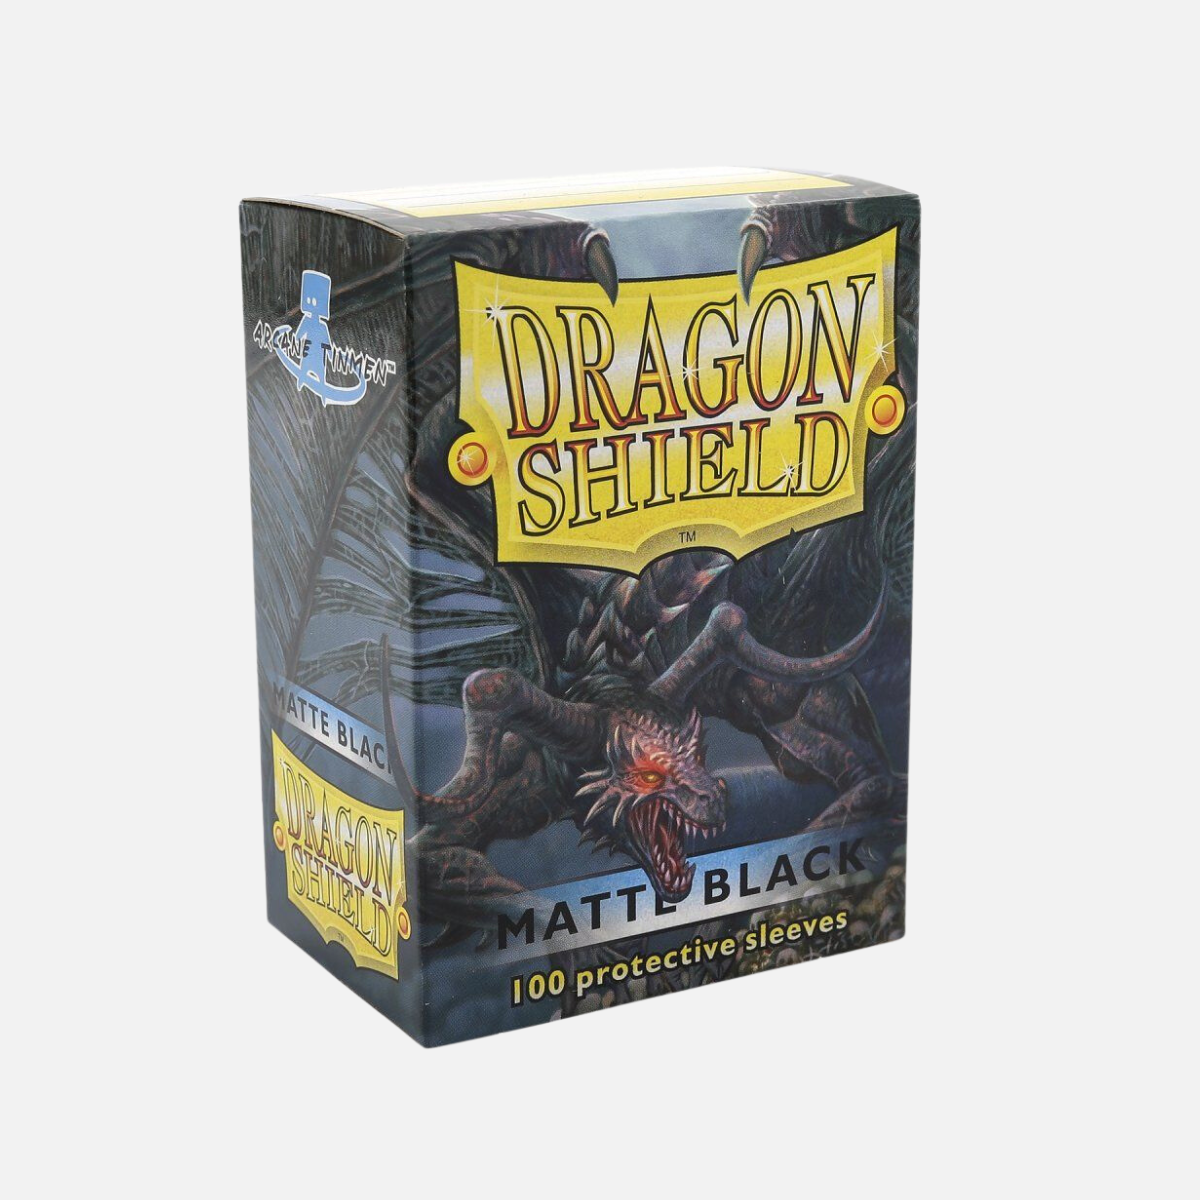 Dragon Shield card sleeves box of 100 black matte